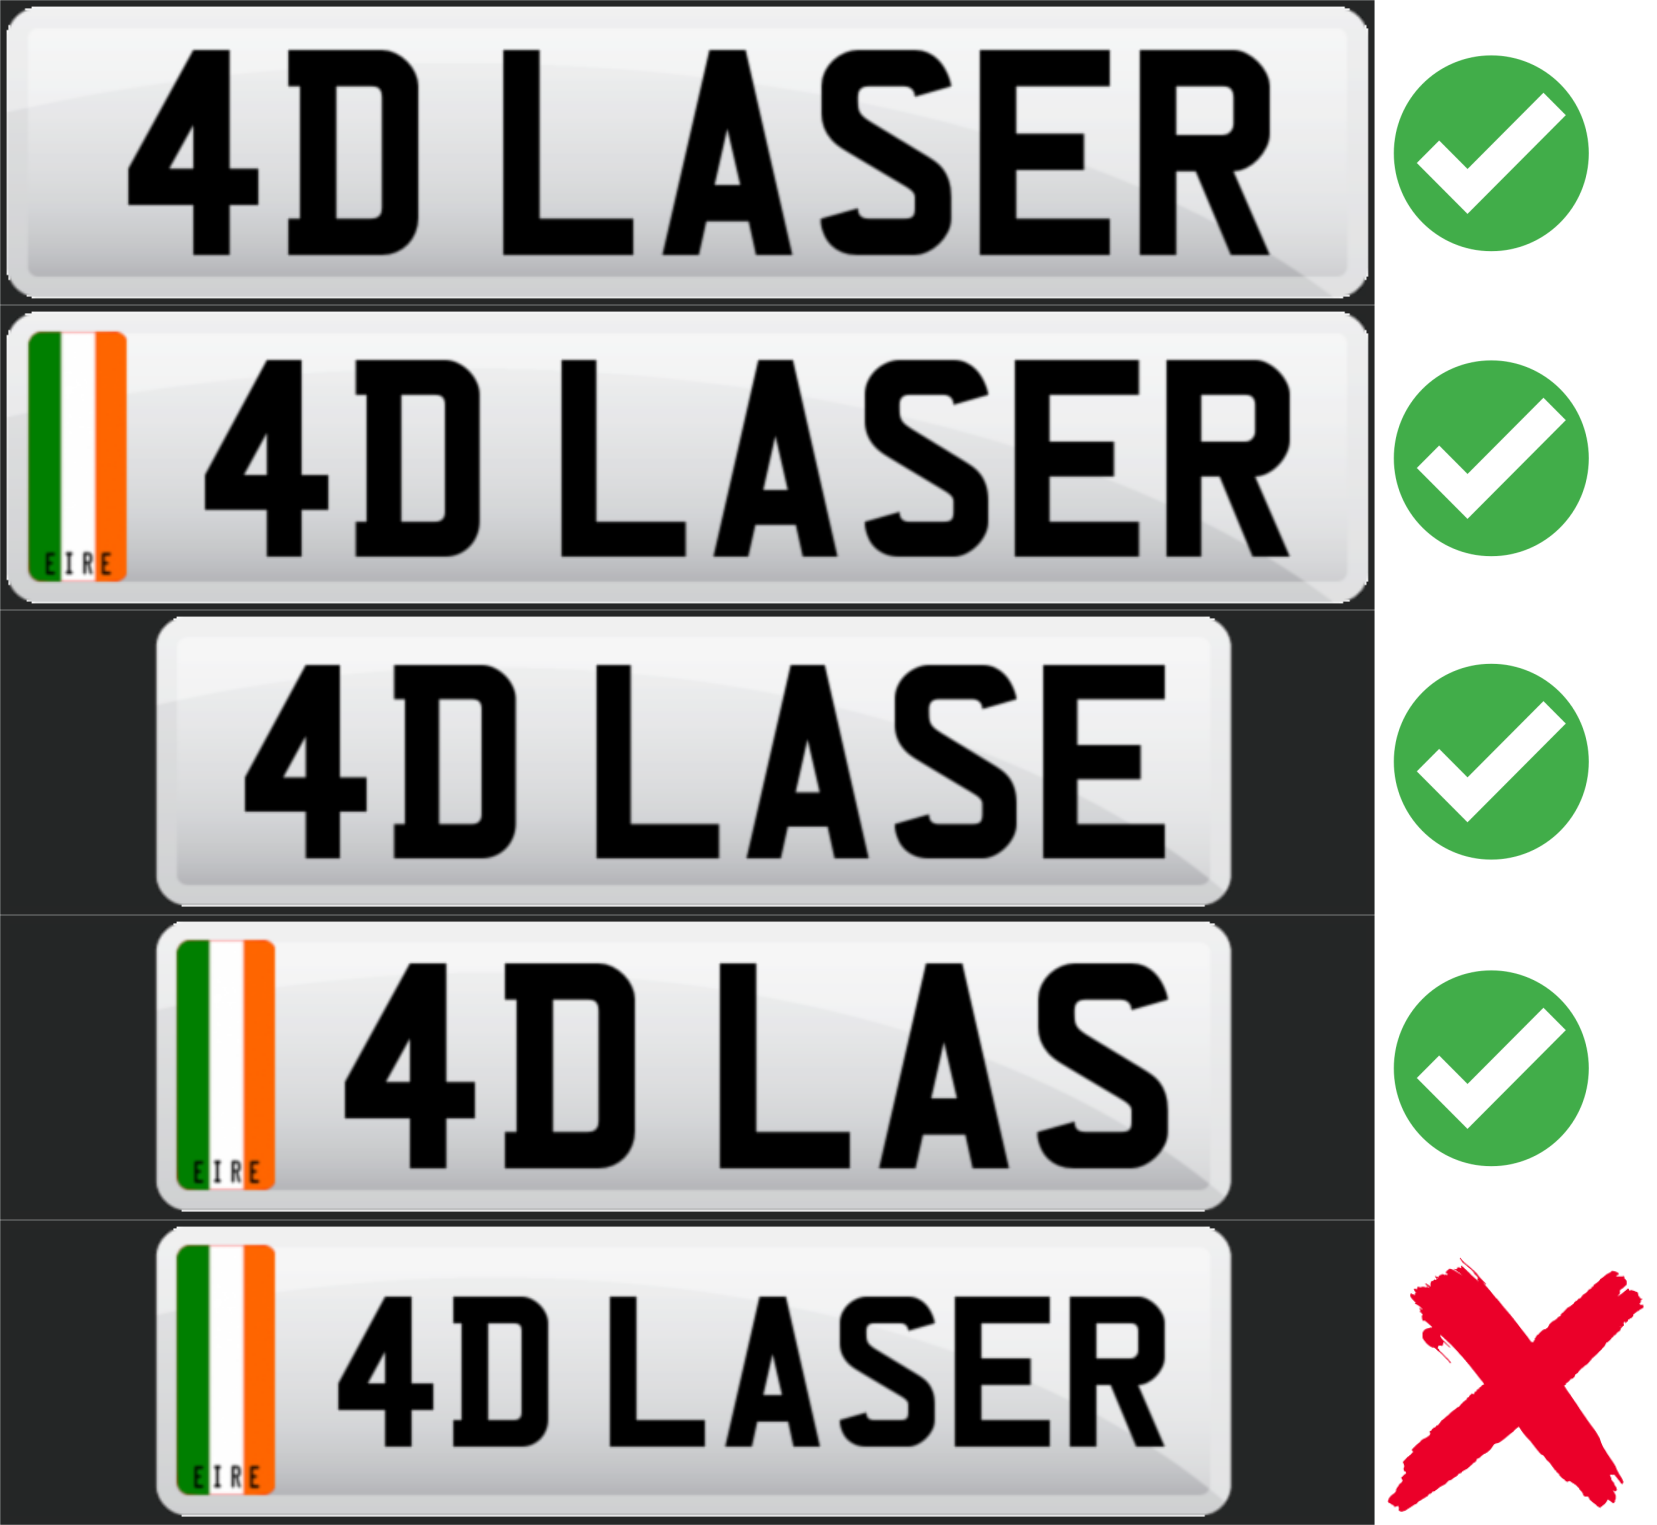 4D plates character limit 